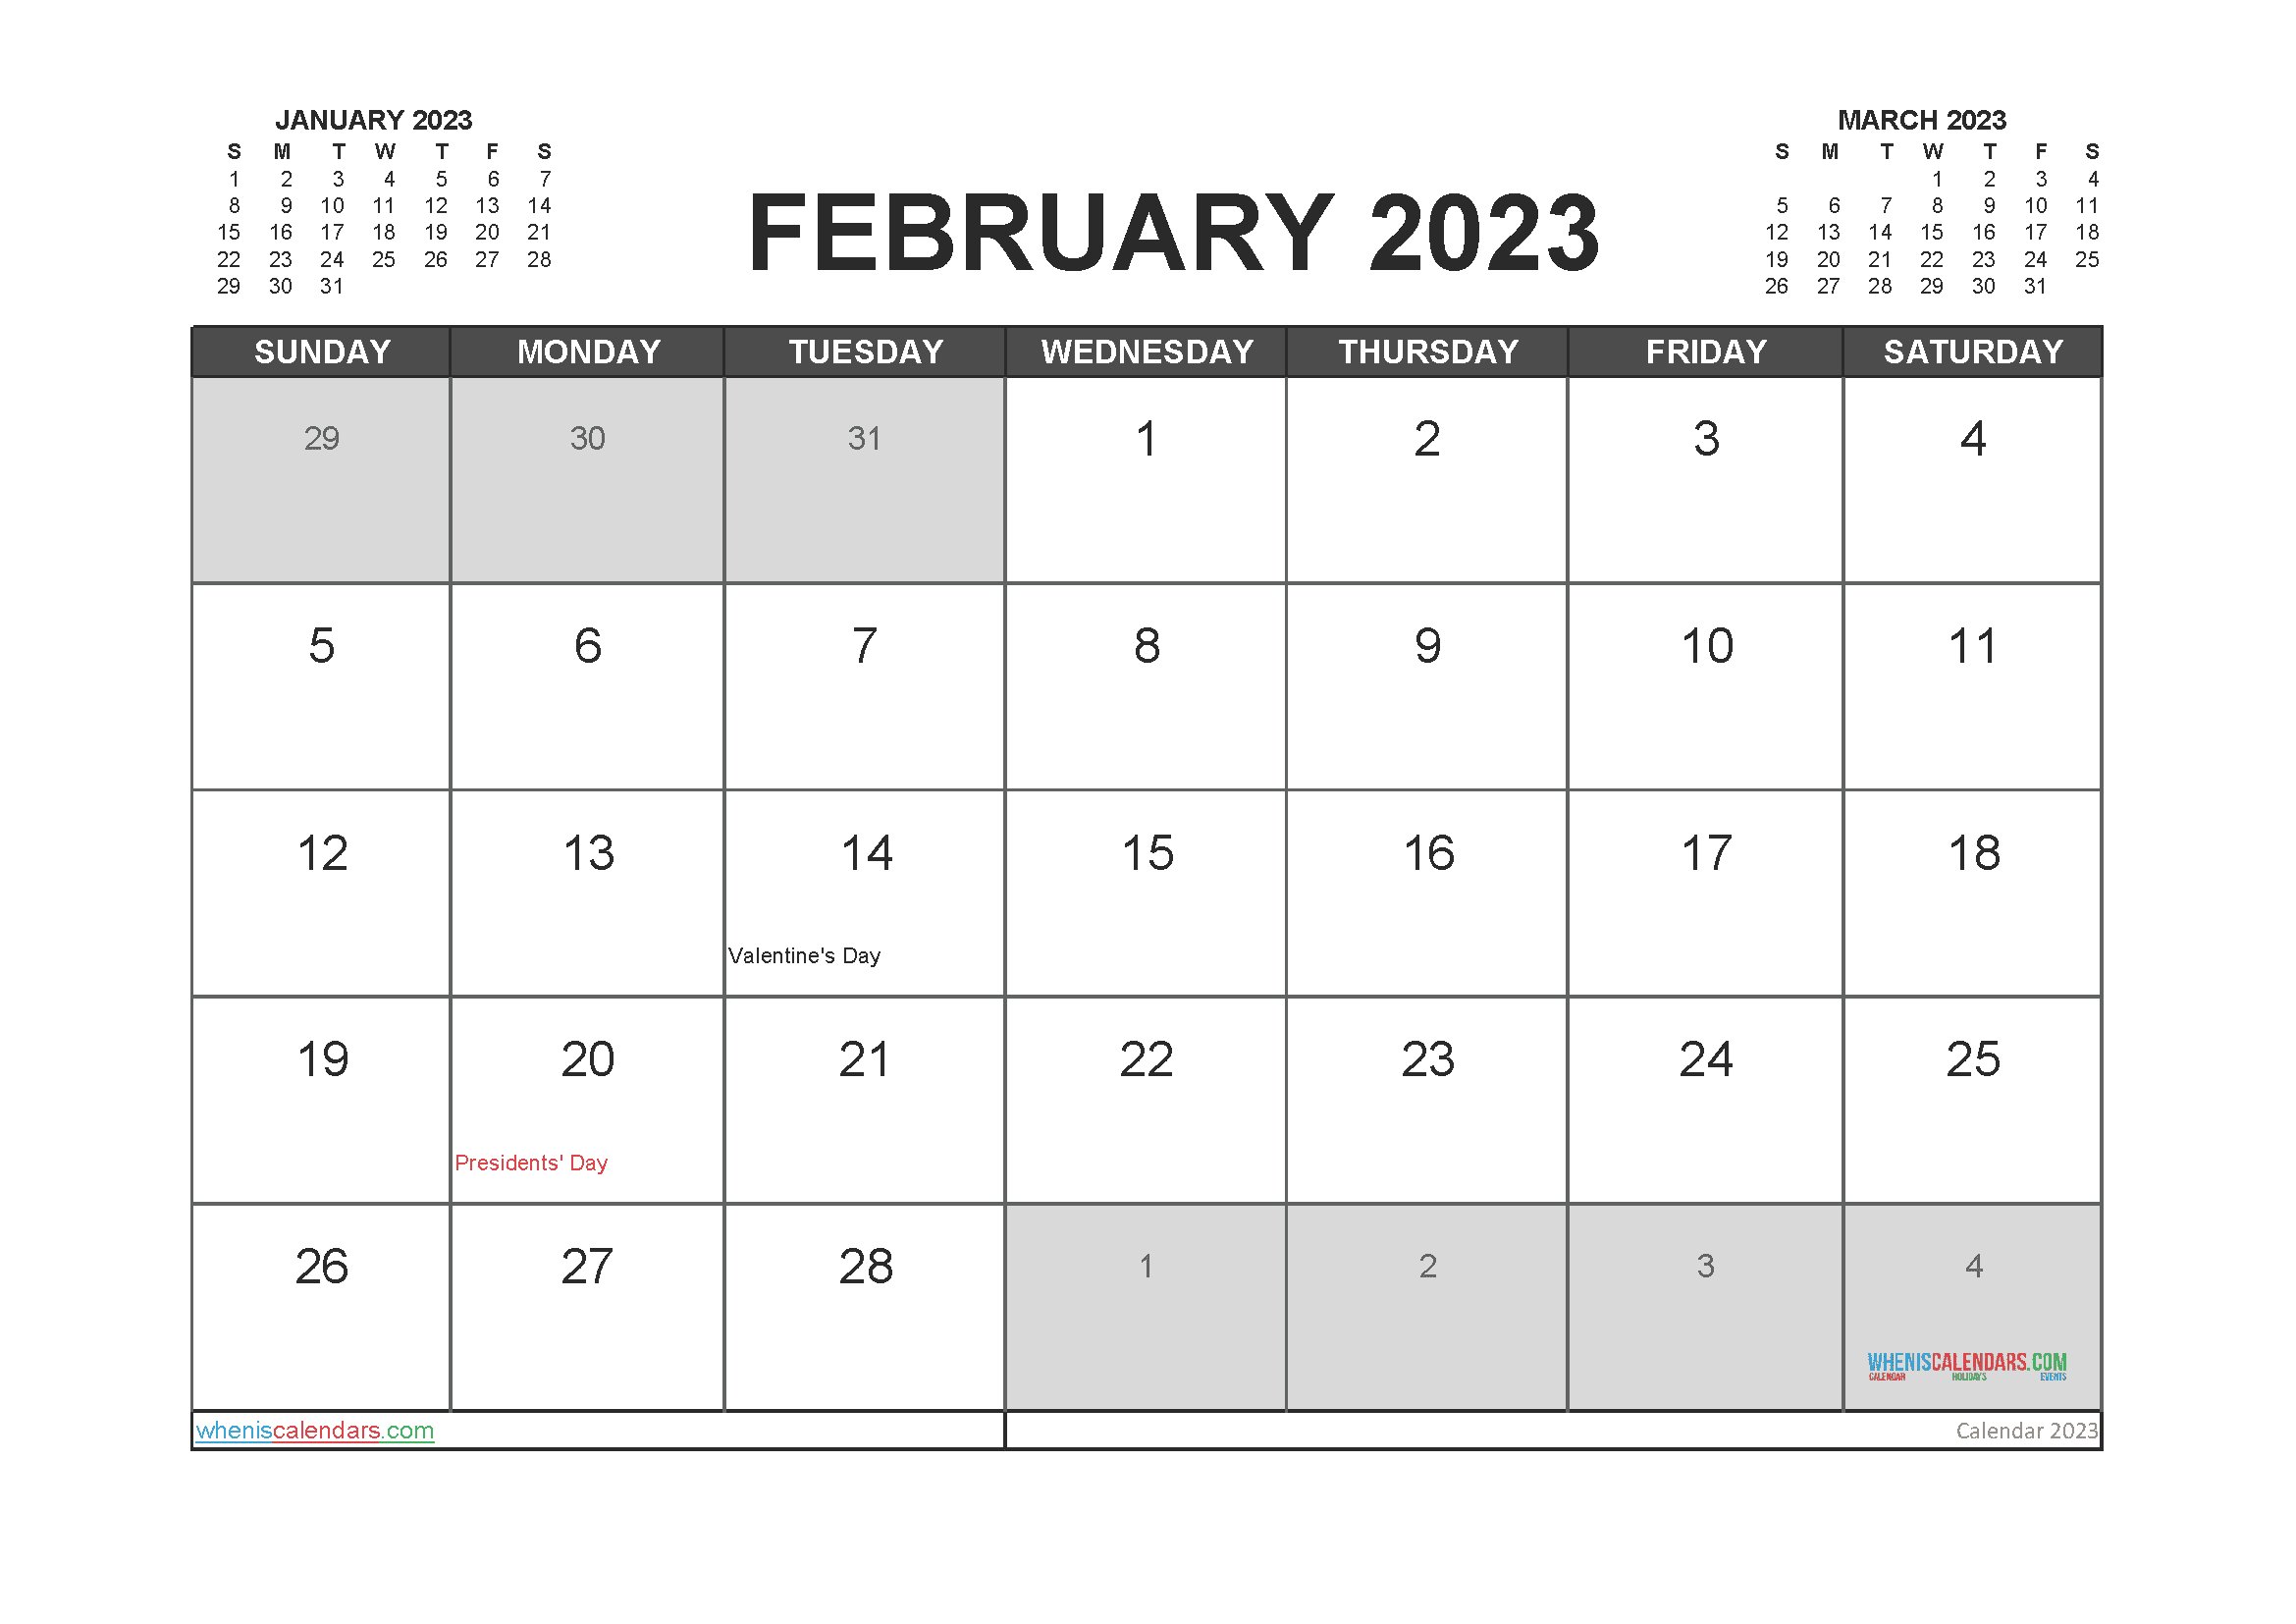 Free 2023 Calendar February Printable